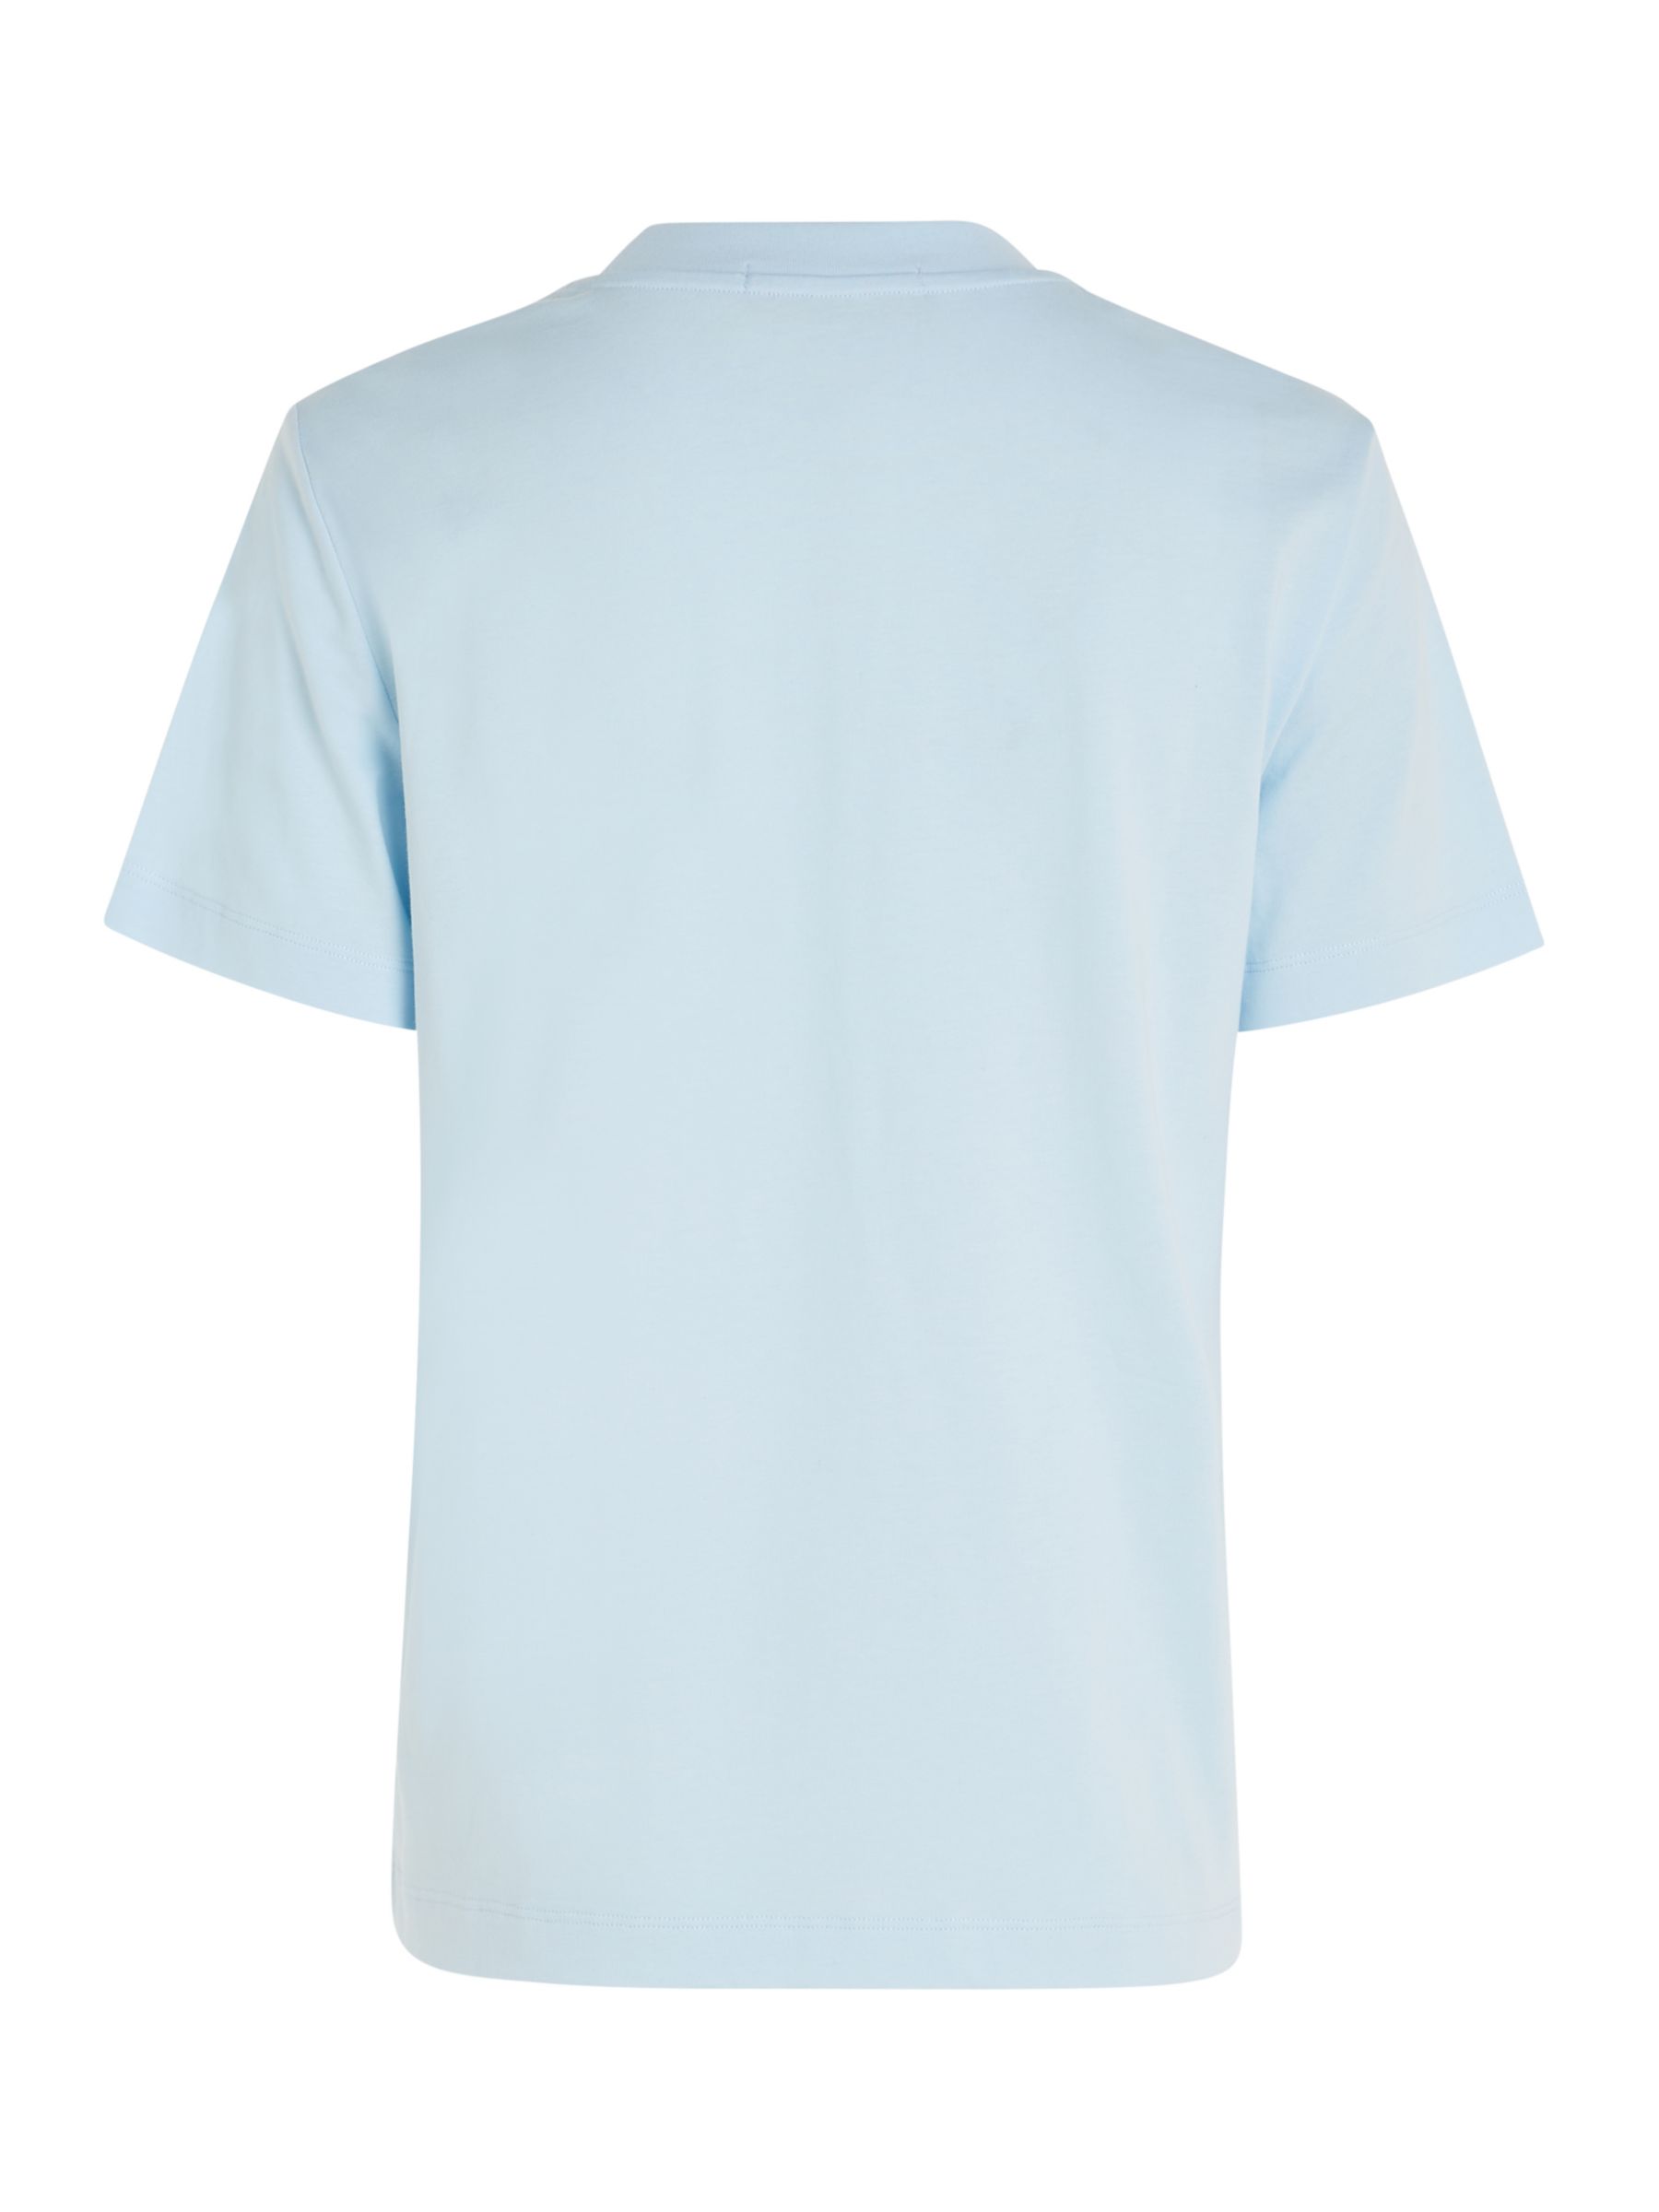 Partners Klein Neck Jeans & Lewis Keepsake John Calvin Logo Sequin Calvin Klein at Crew T-Shirt, Blue